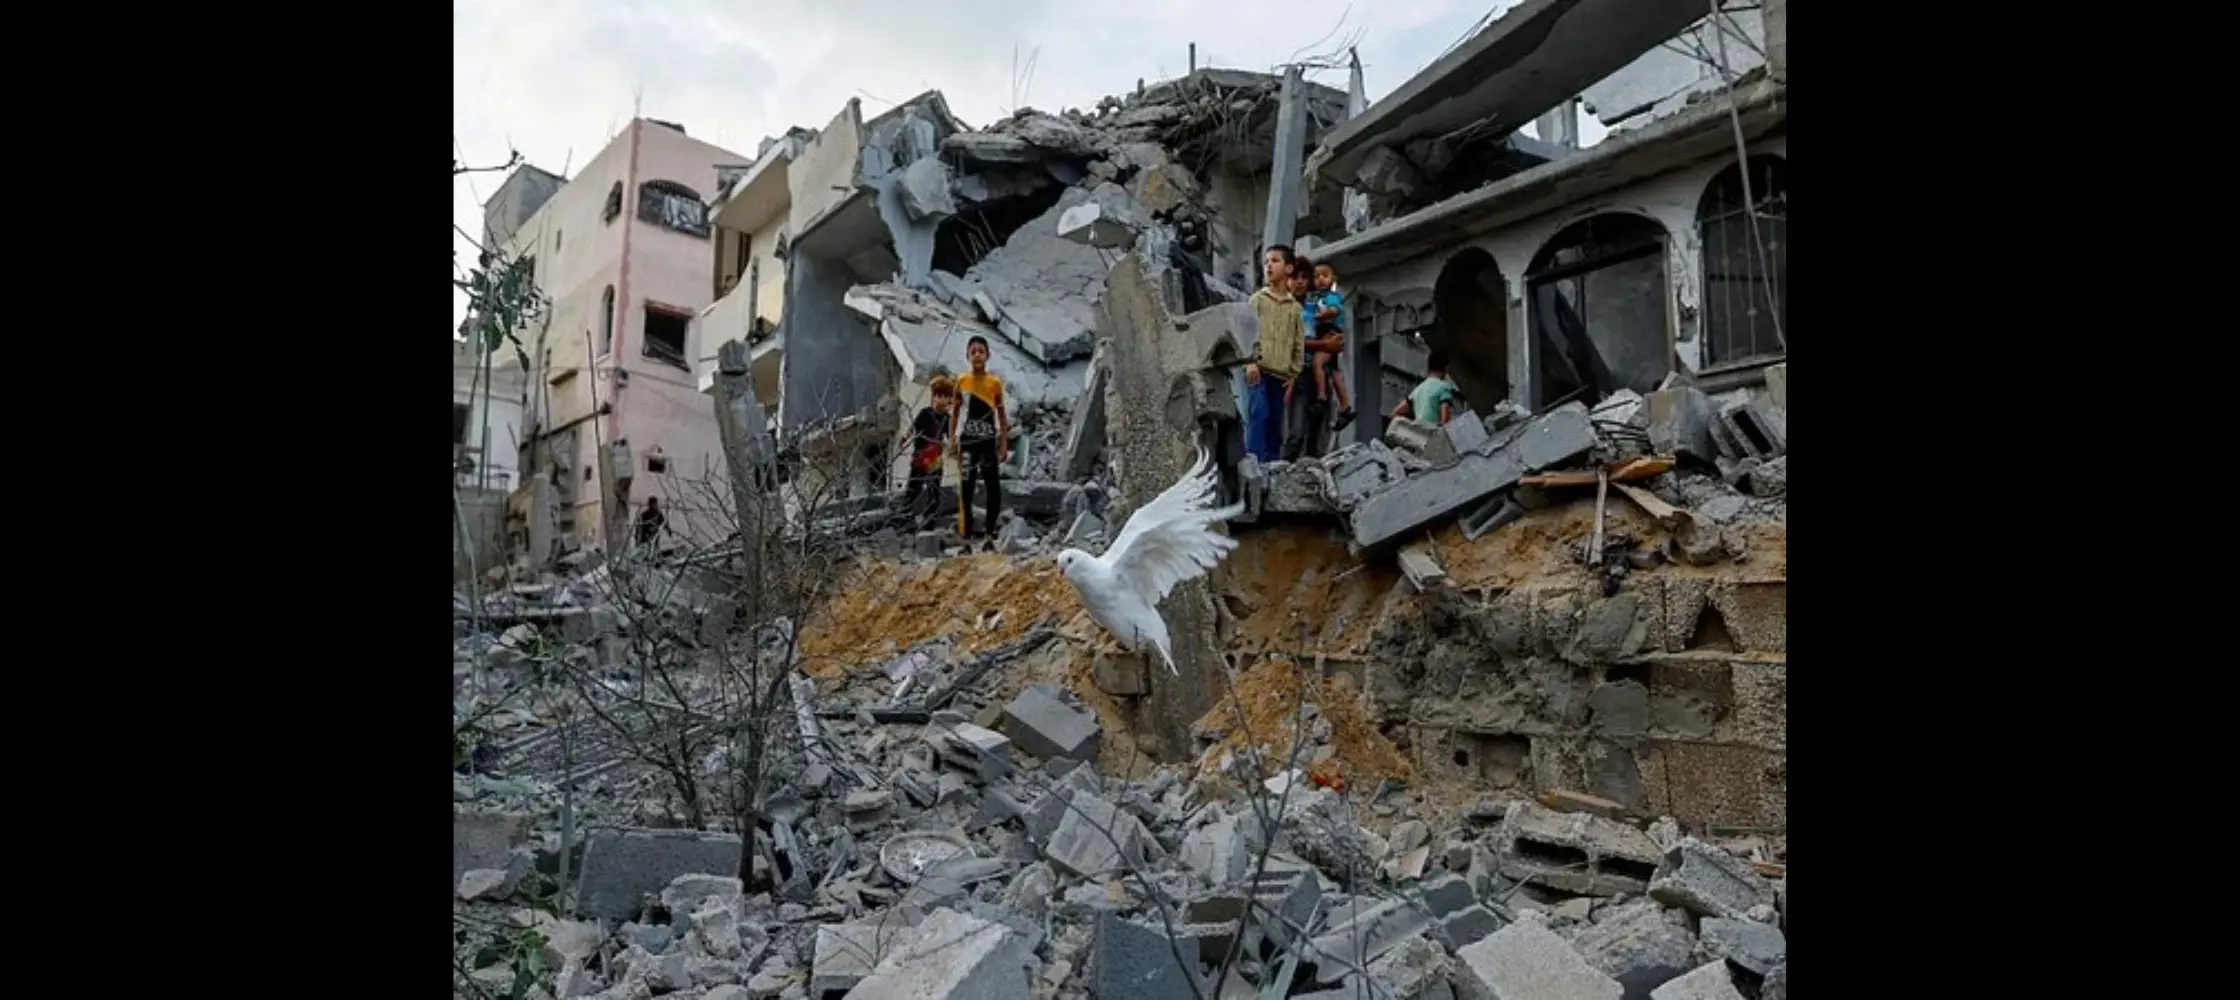 Around 70 % of Gaza homes damaged or destroyed